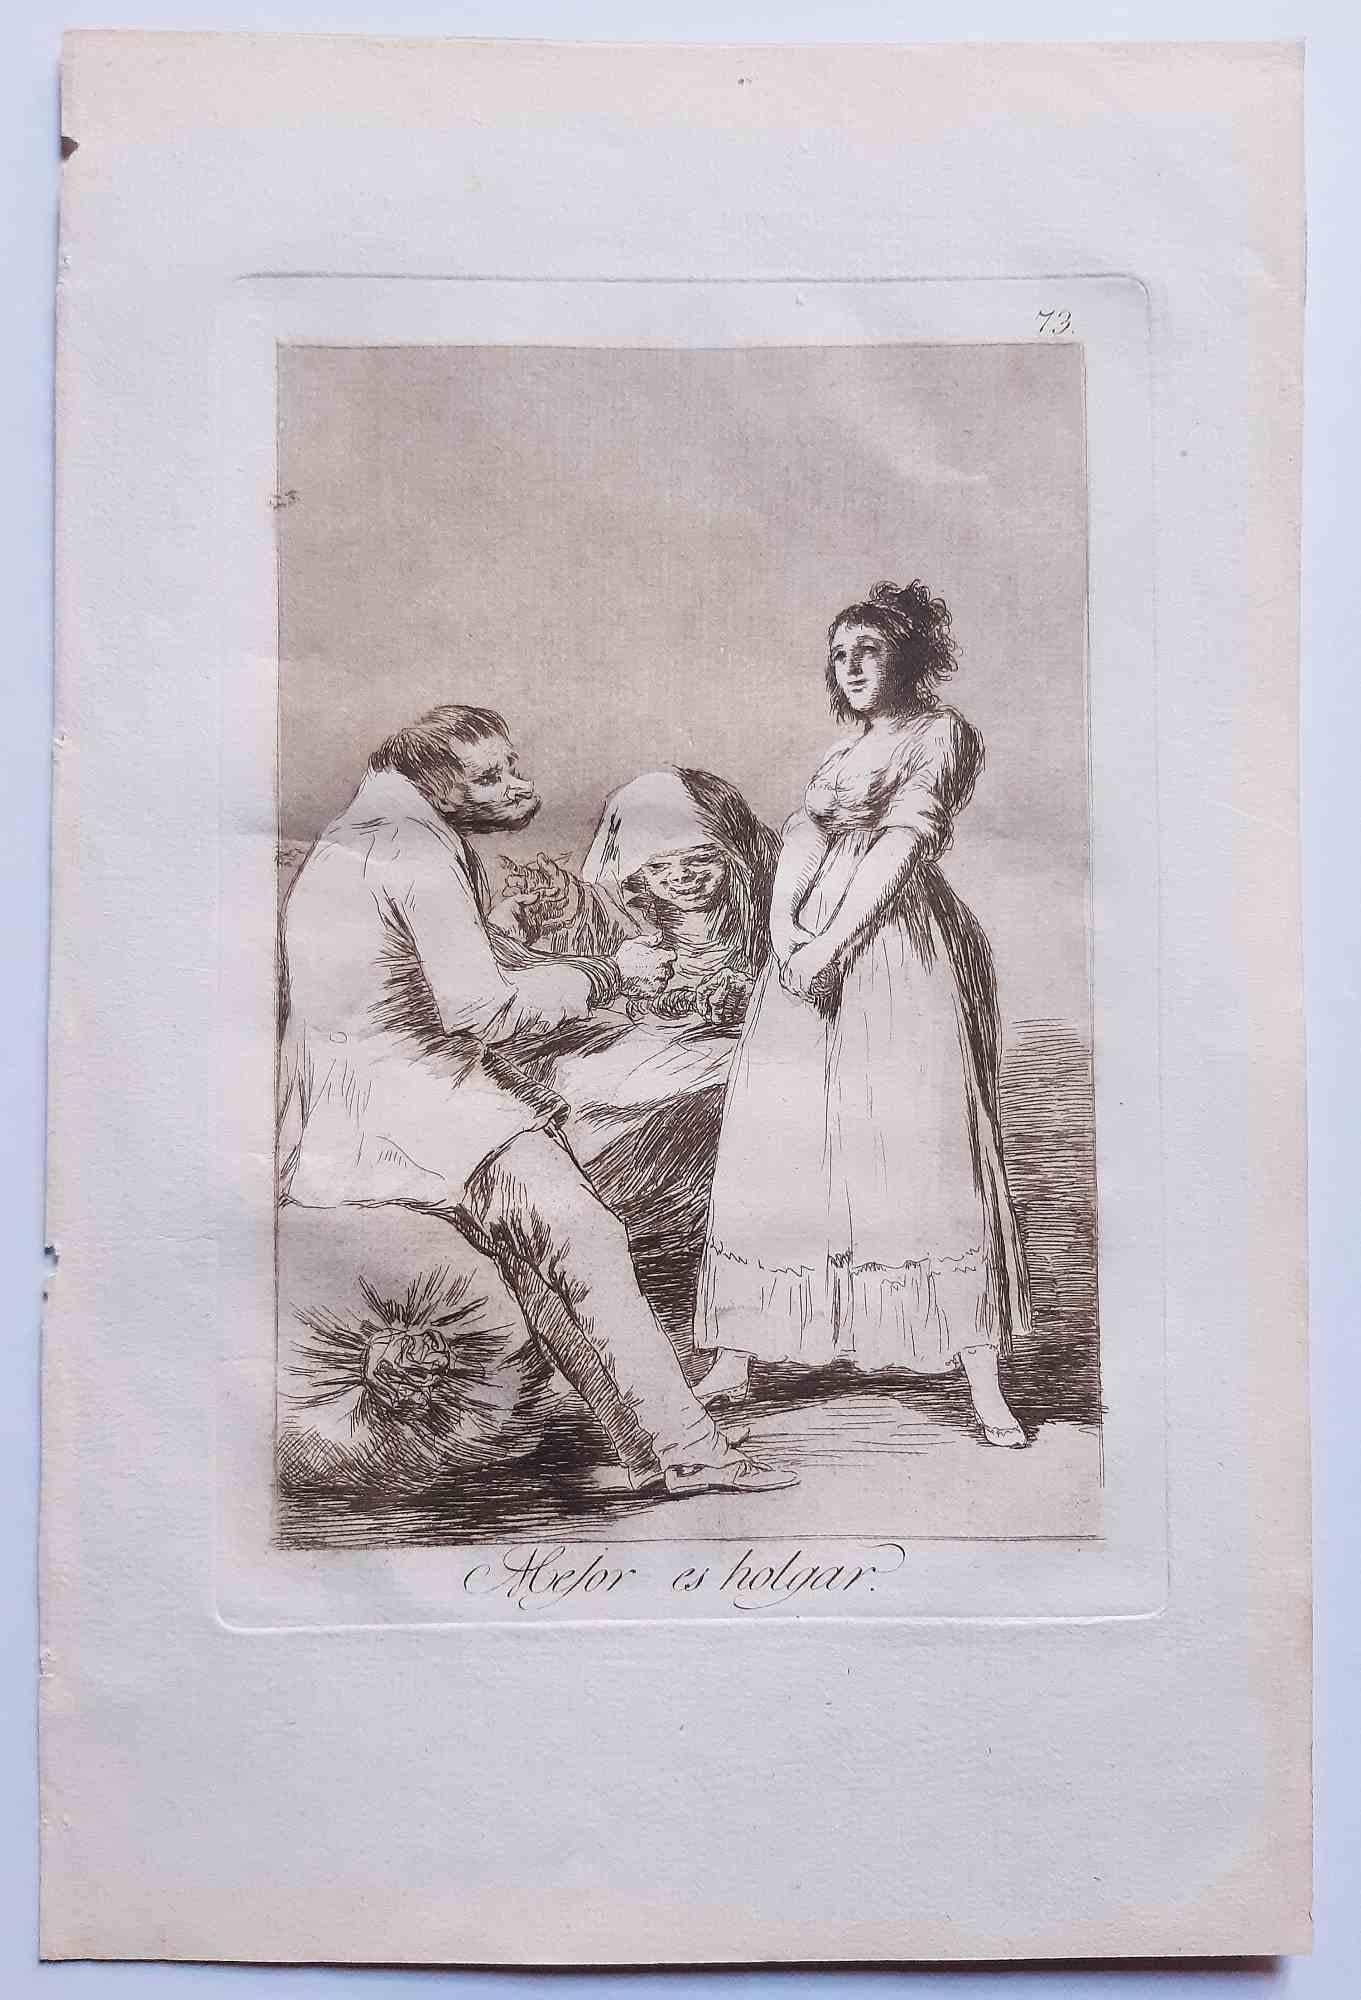 Mejor es Holgar from Los Caprichos - Etching by Francisco Goya - 1799